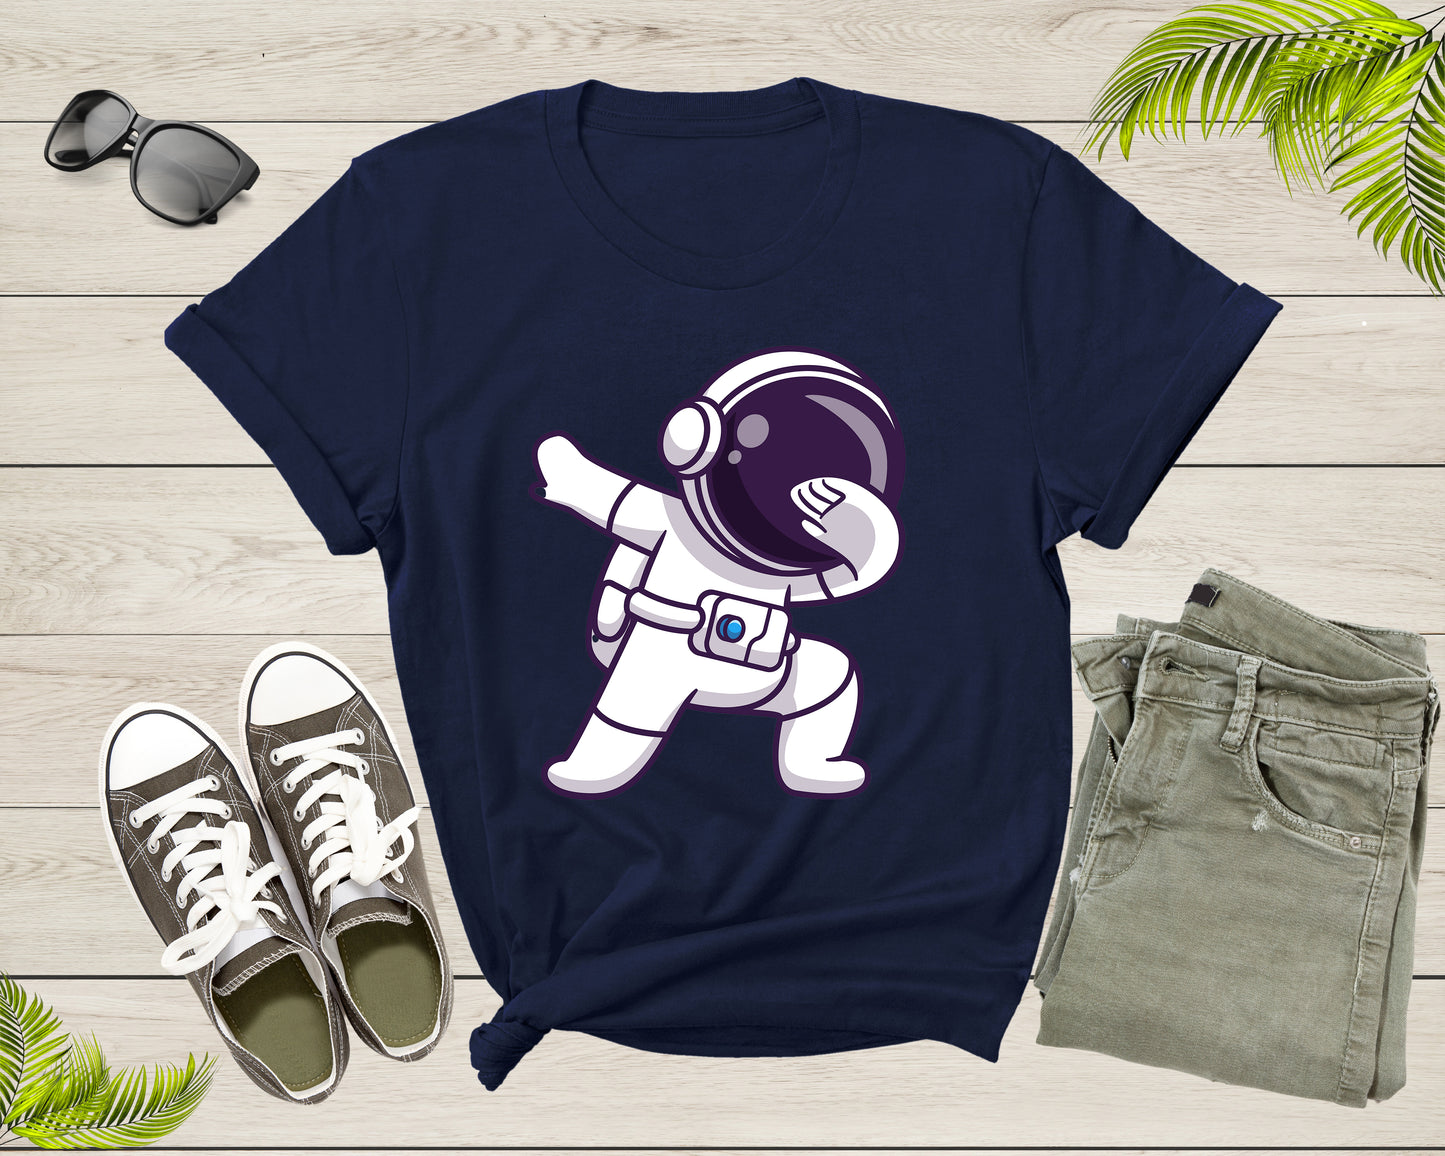 Astronaut Space Lovers Gift Astronaut Spaceman Graphic Design Adult Men Women Kids Boys Girls Shirt Astronaut Birthday Present T-shirt